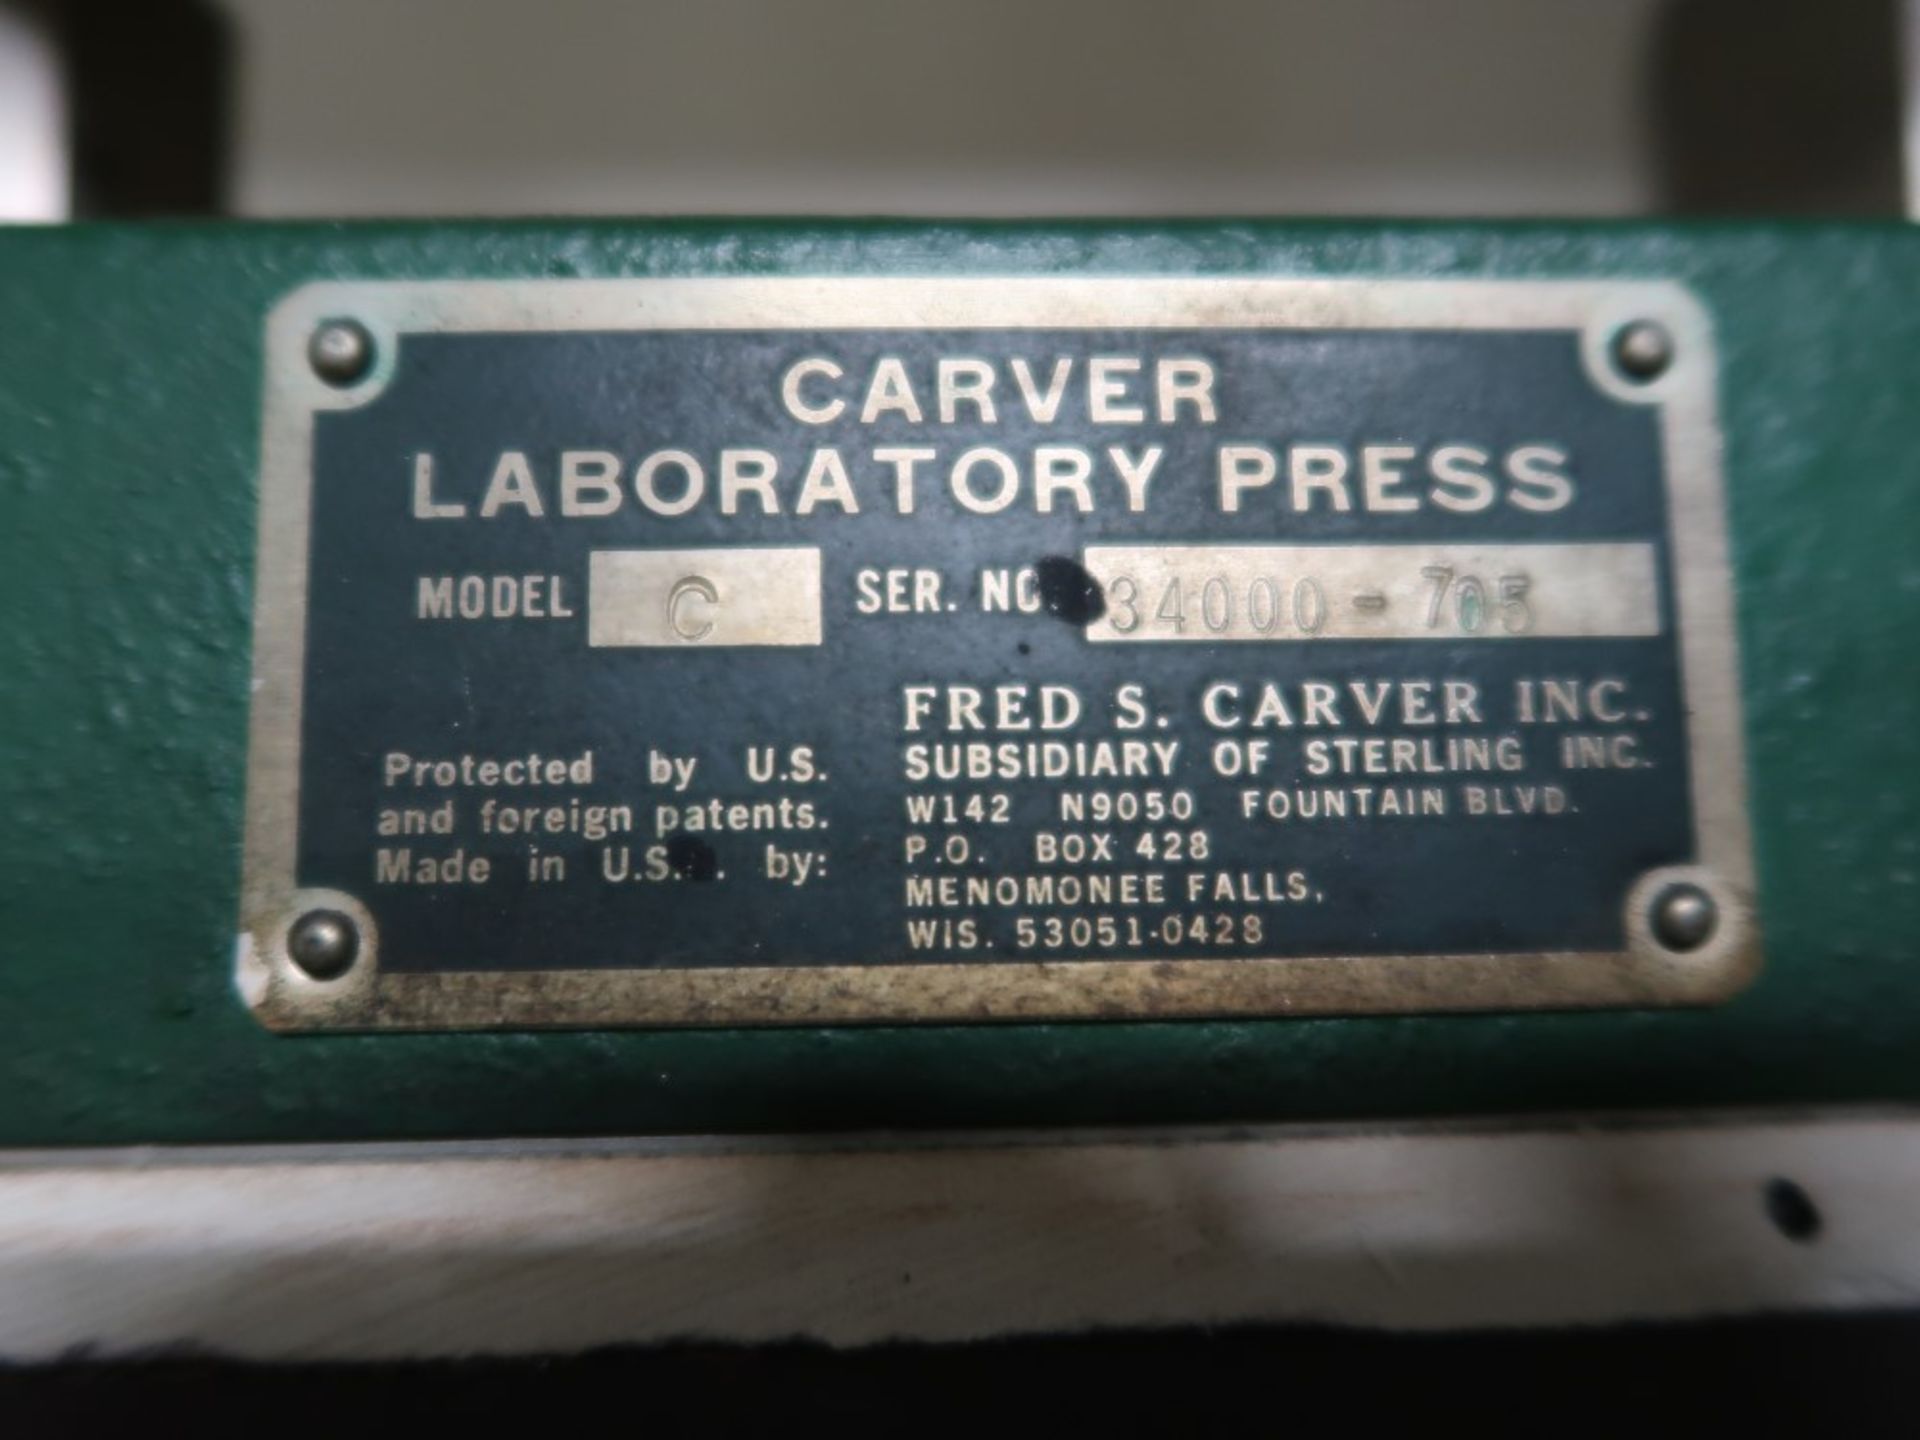 Carver Laboratory Press Model C S/N 34000-705 - Image 5 of 5